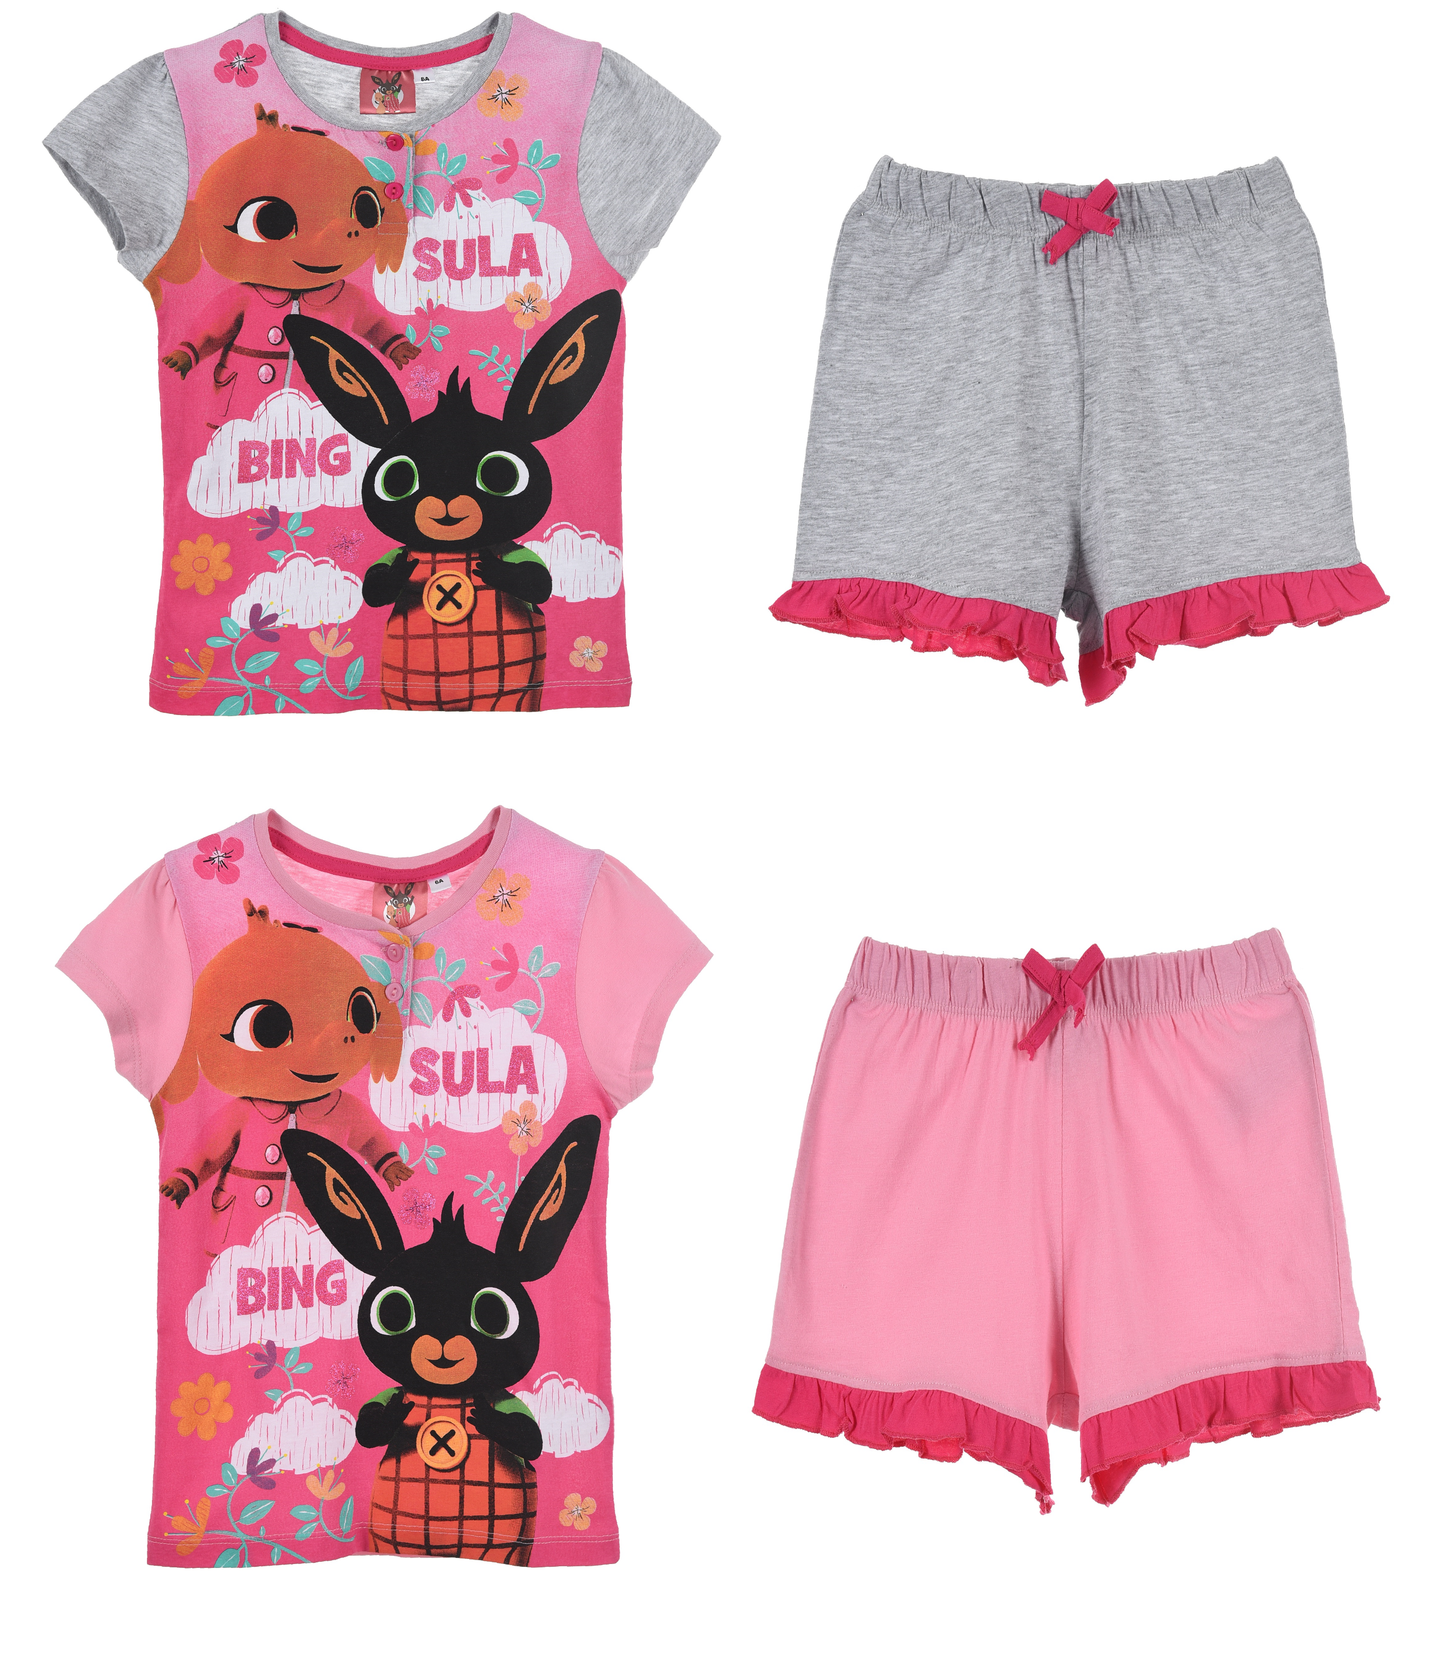 Bing Bunny & Sula Elephant Pyjama Set